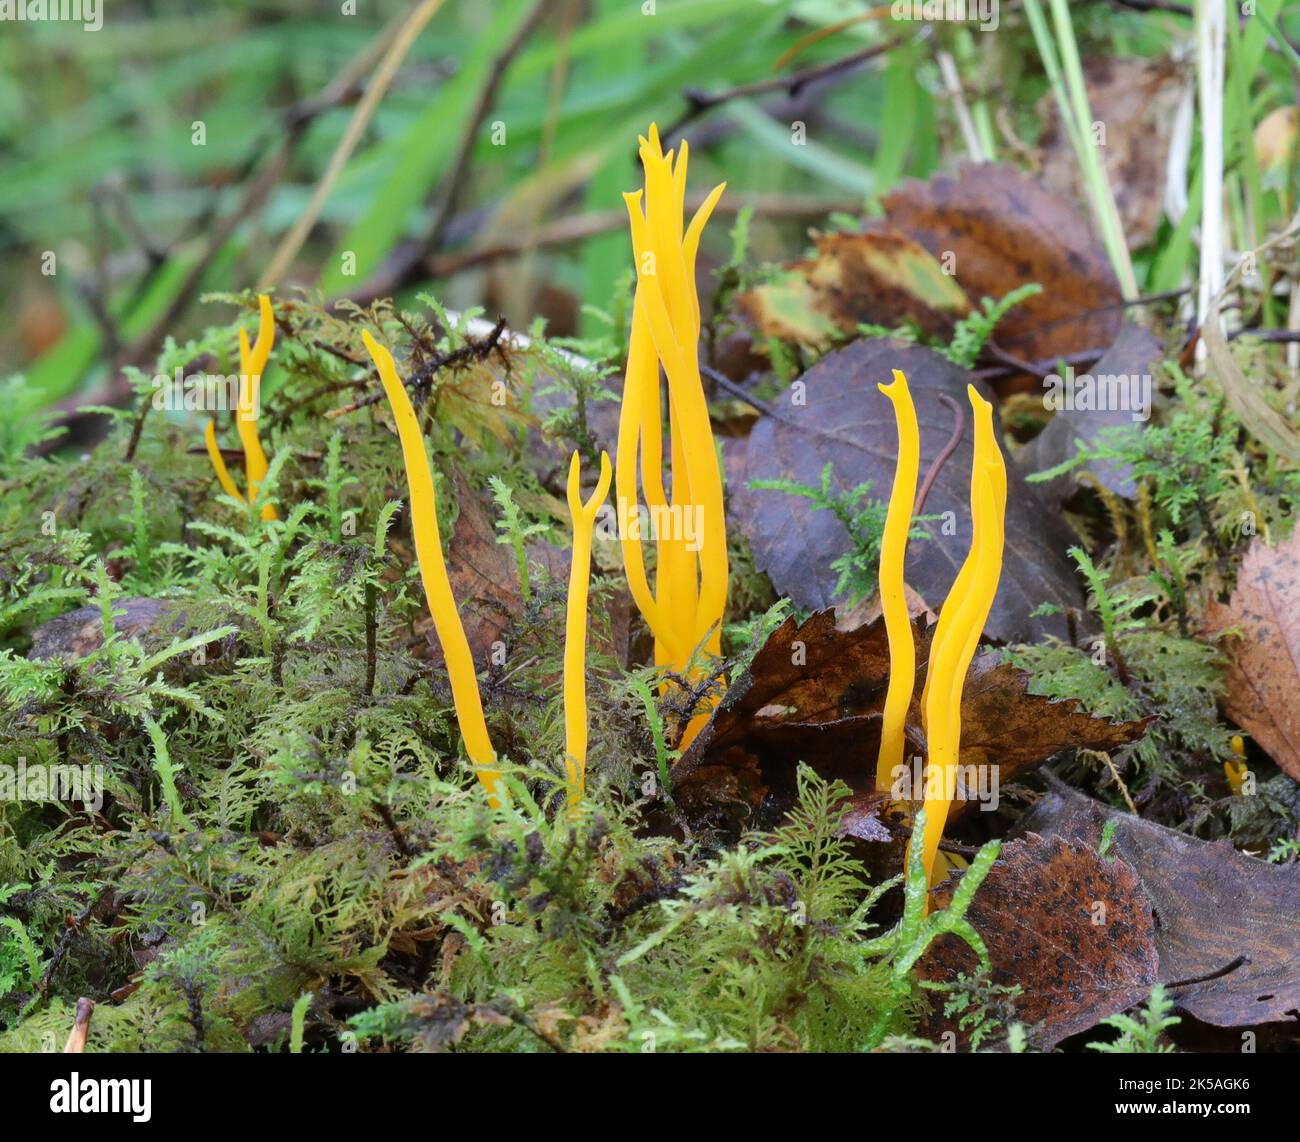 Golden Spindles Fungus - Clavulinopsis fusiformis Stock Photo